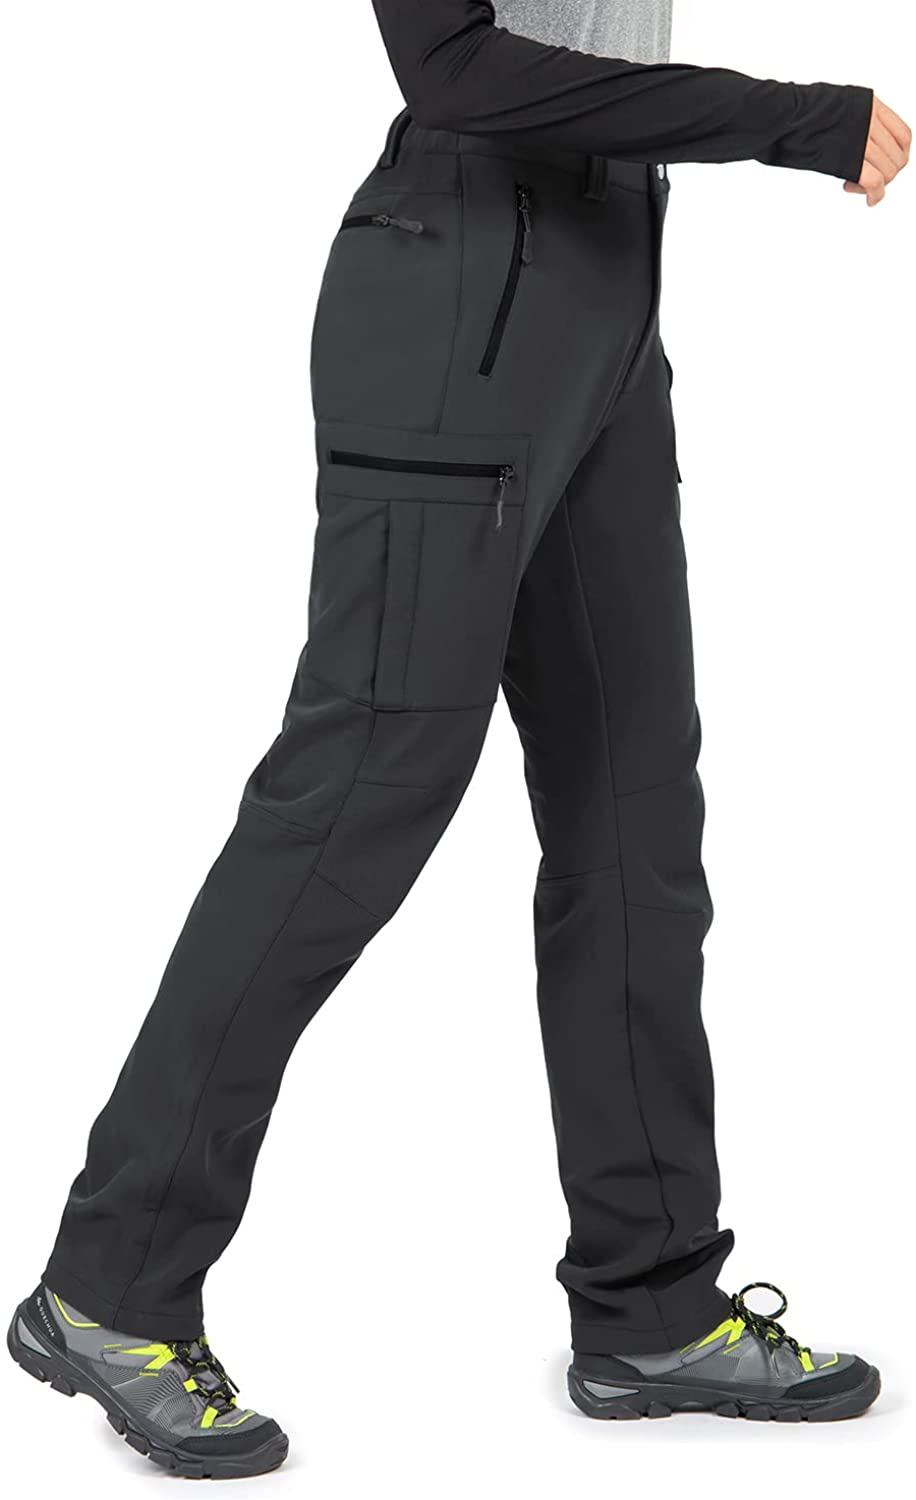  Women's Fleece Lined Hiking Pants Waterproof Windproof Warm  Insulated Snow Ski Pants Winter Softshell Cargo Snowboard Pants Grey S :  Clothing, Shoes & Jewelry